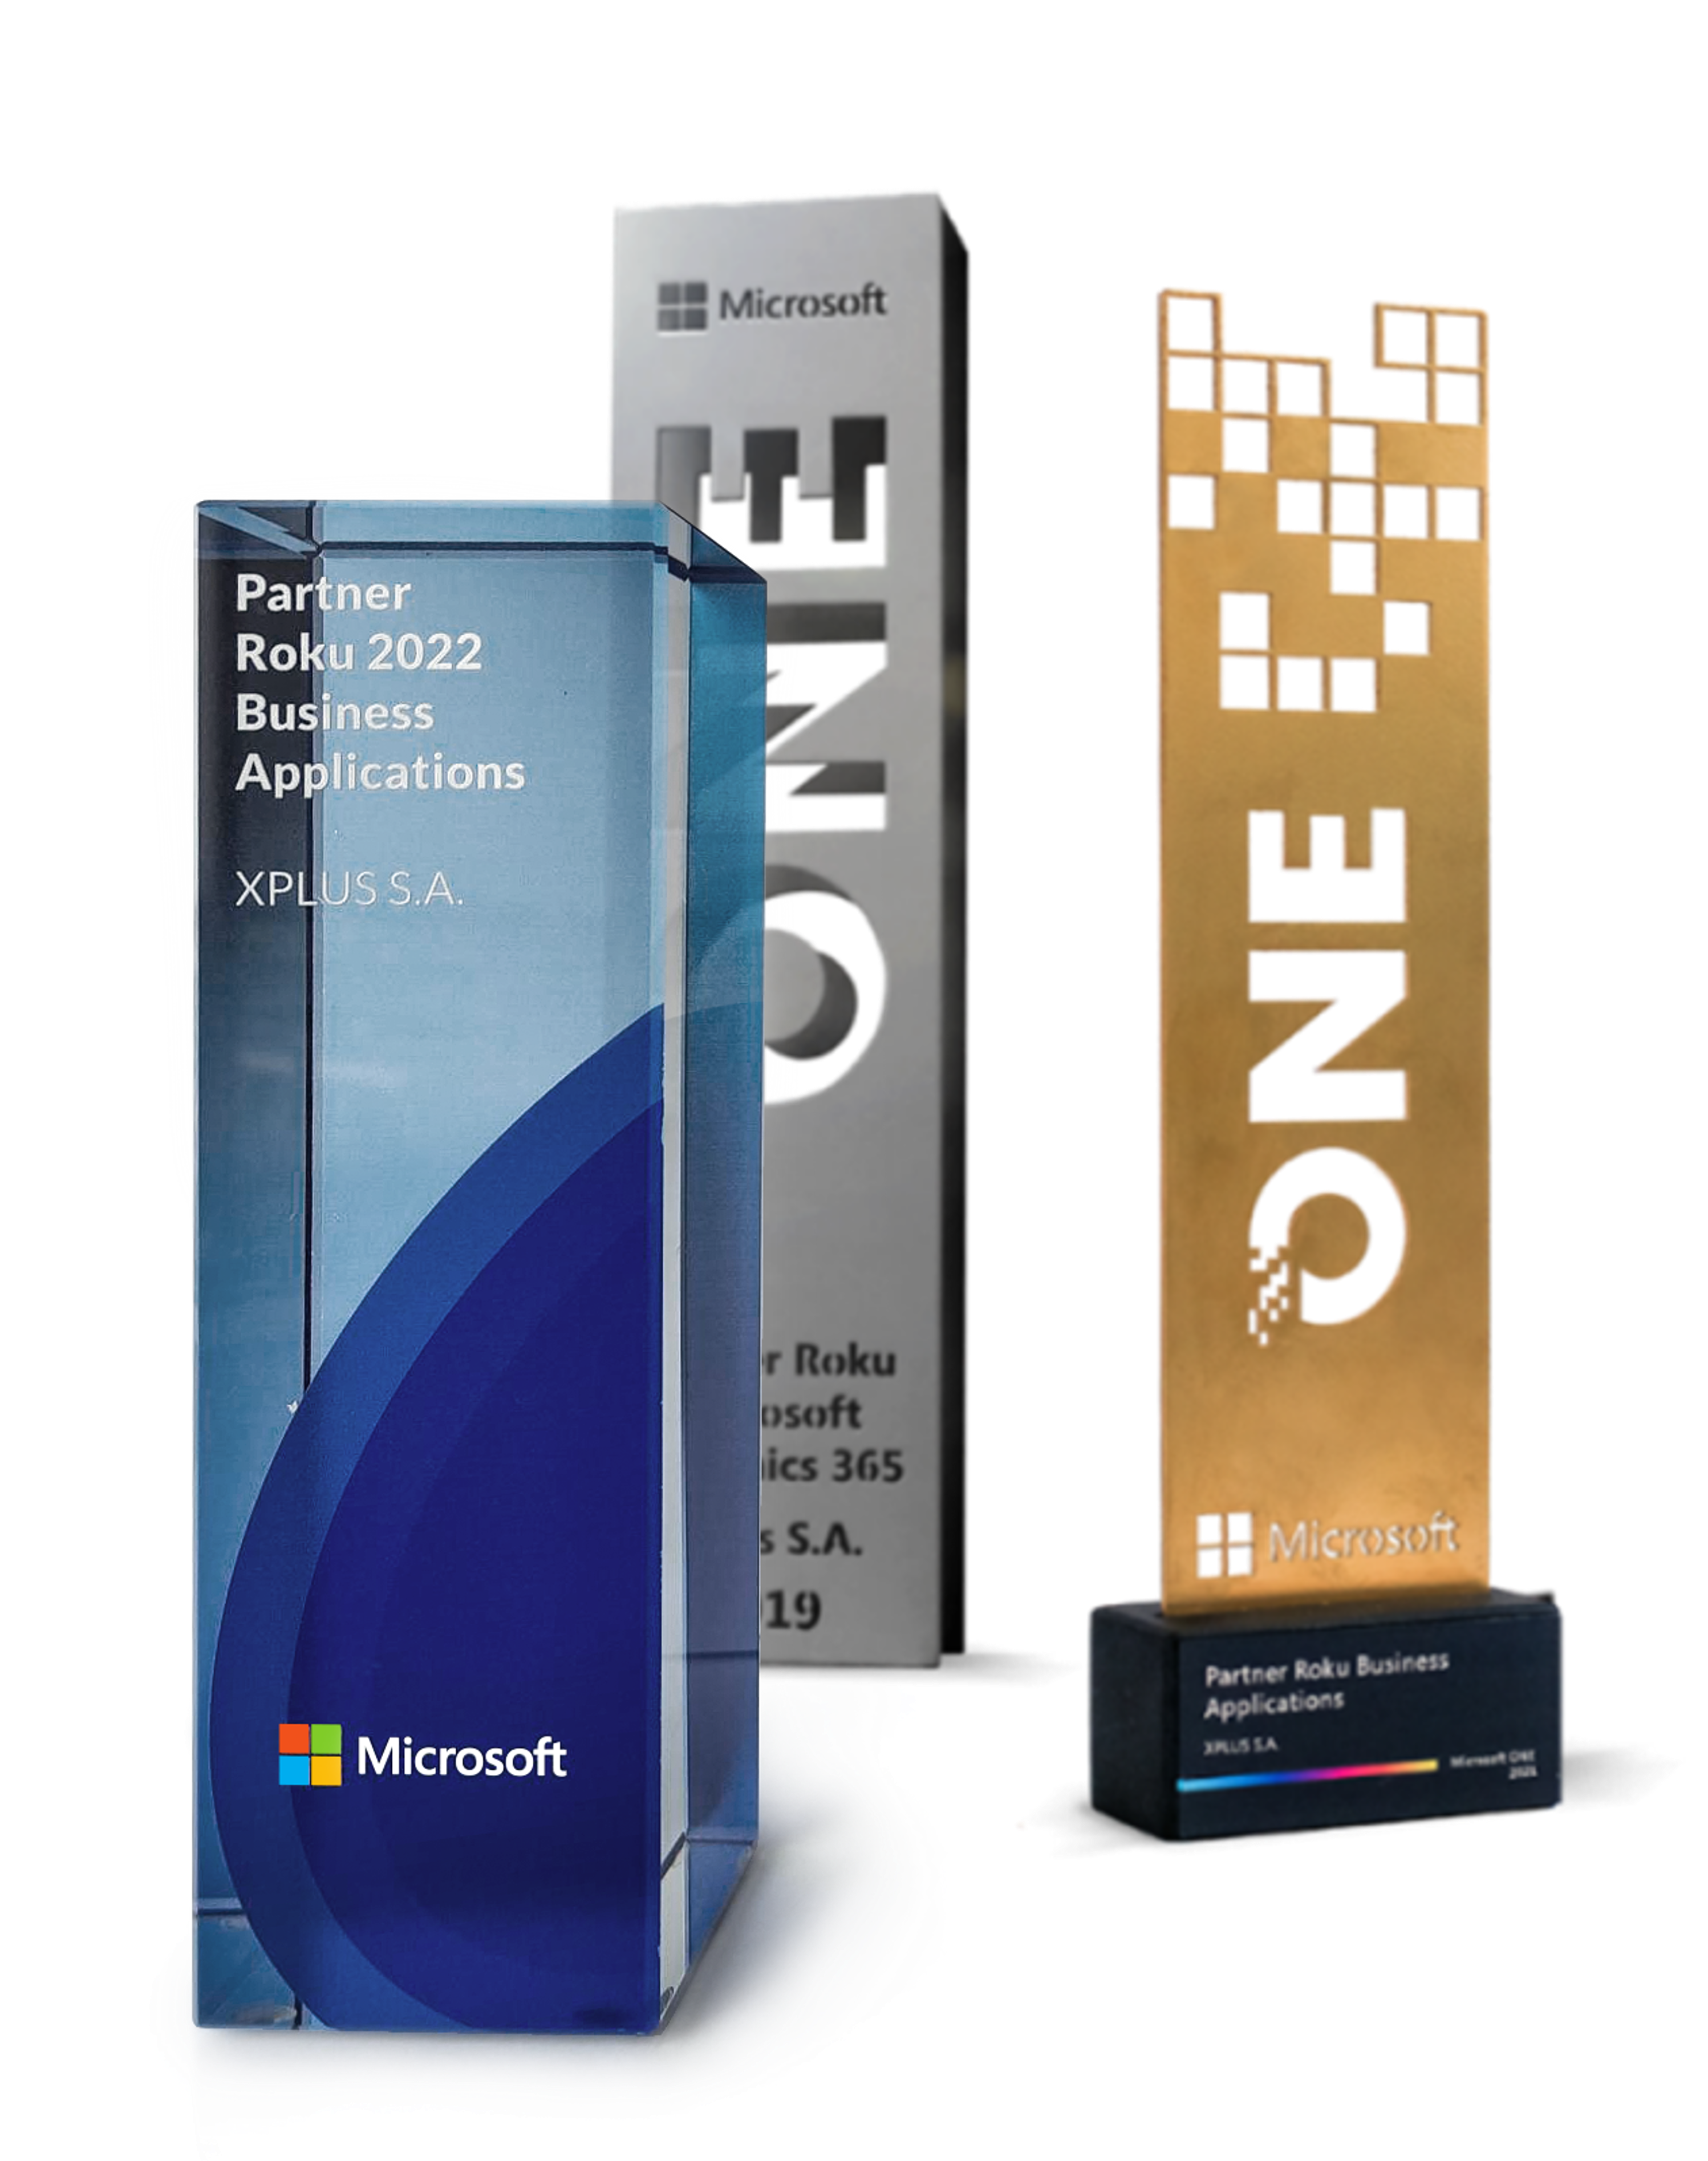 Microsoft awards